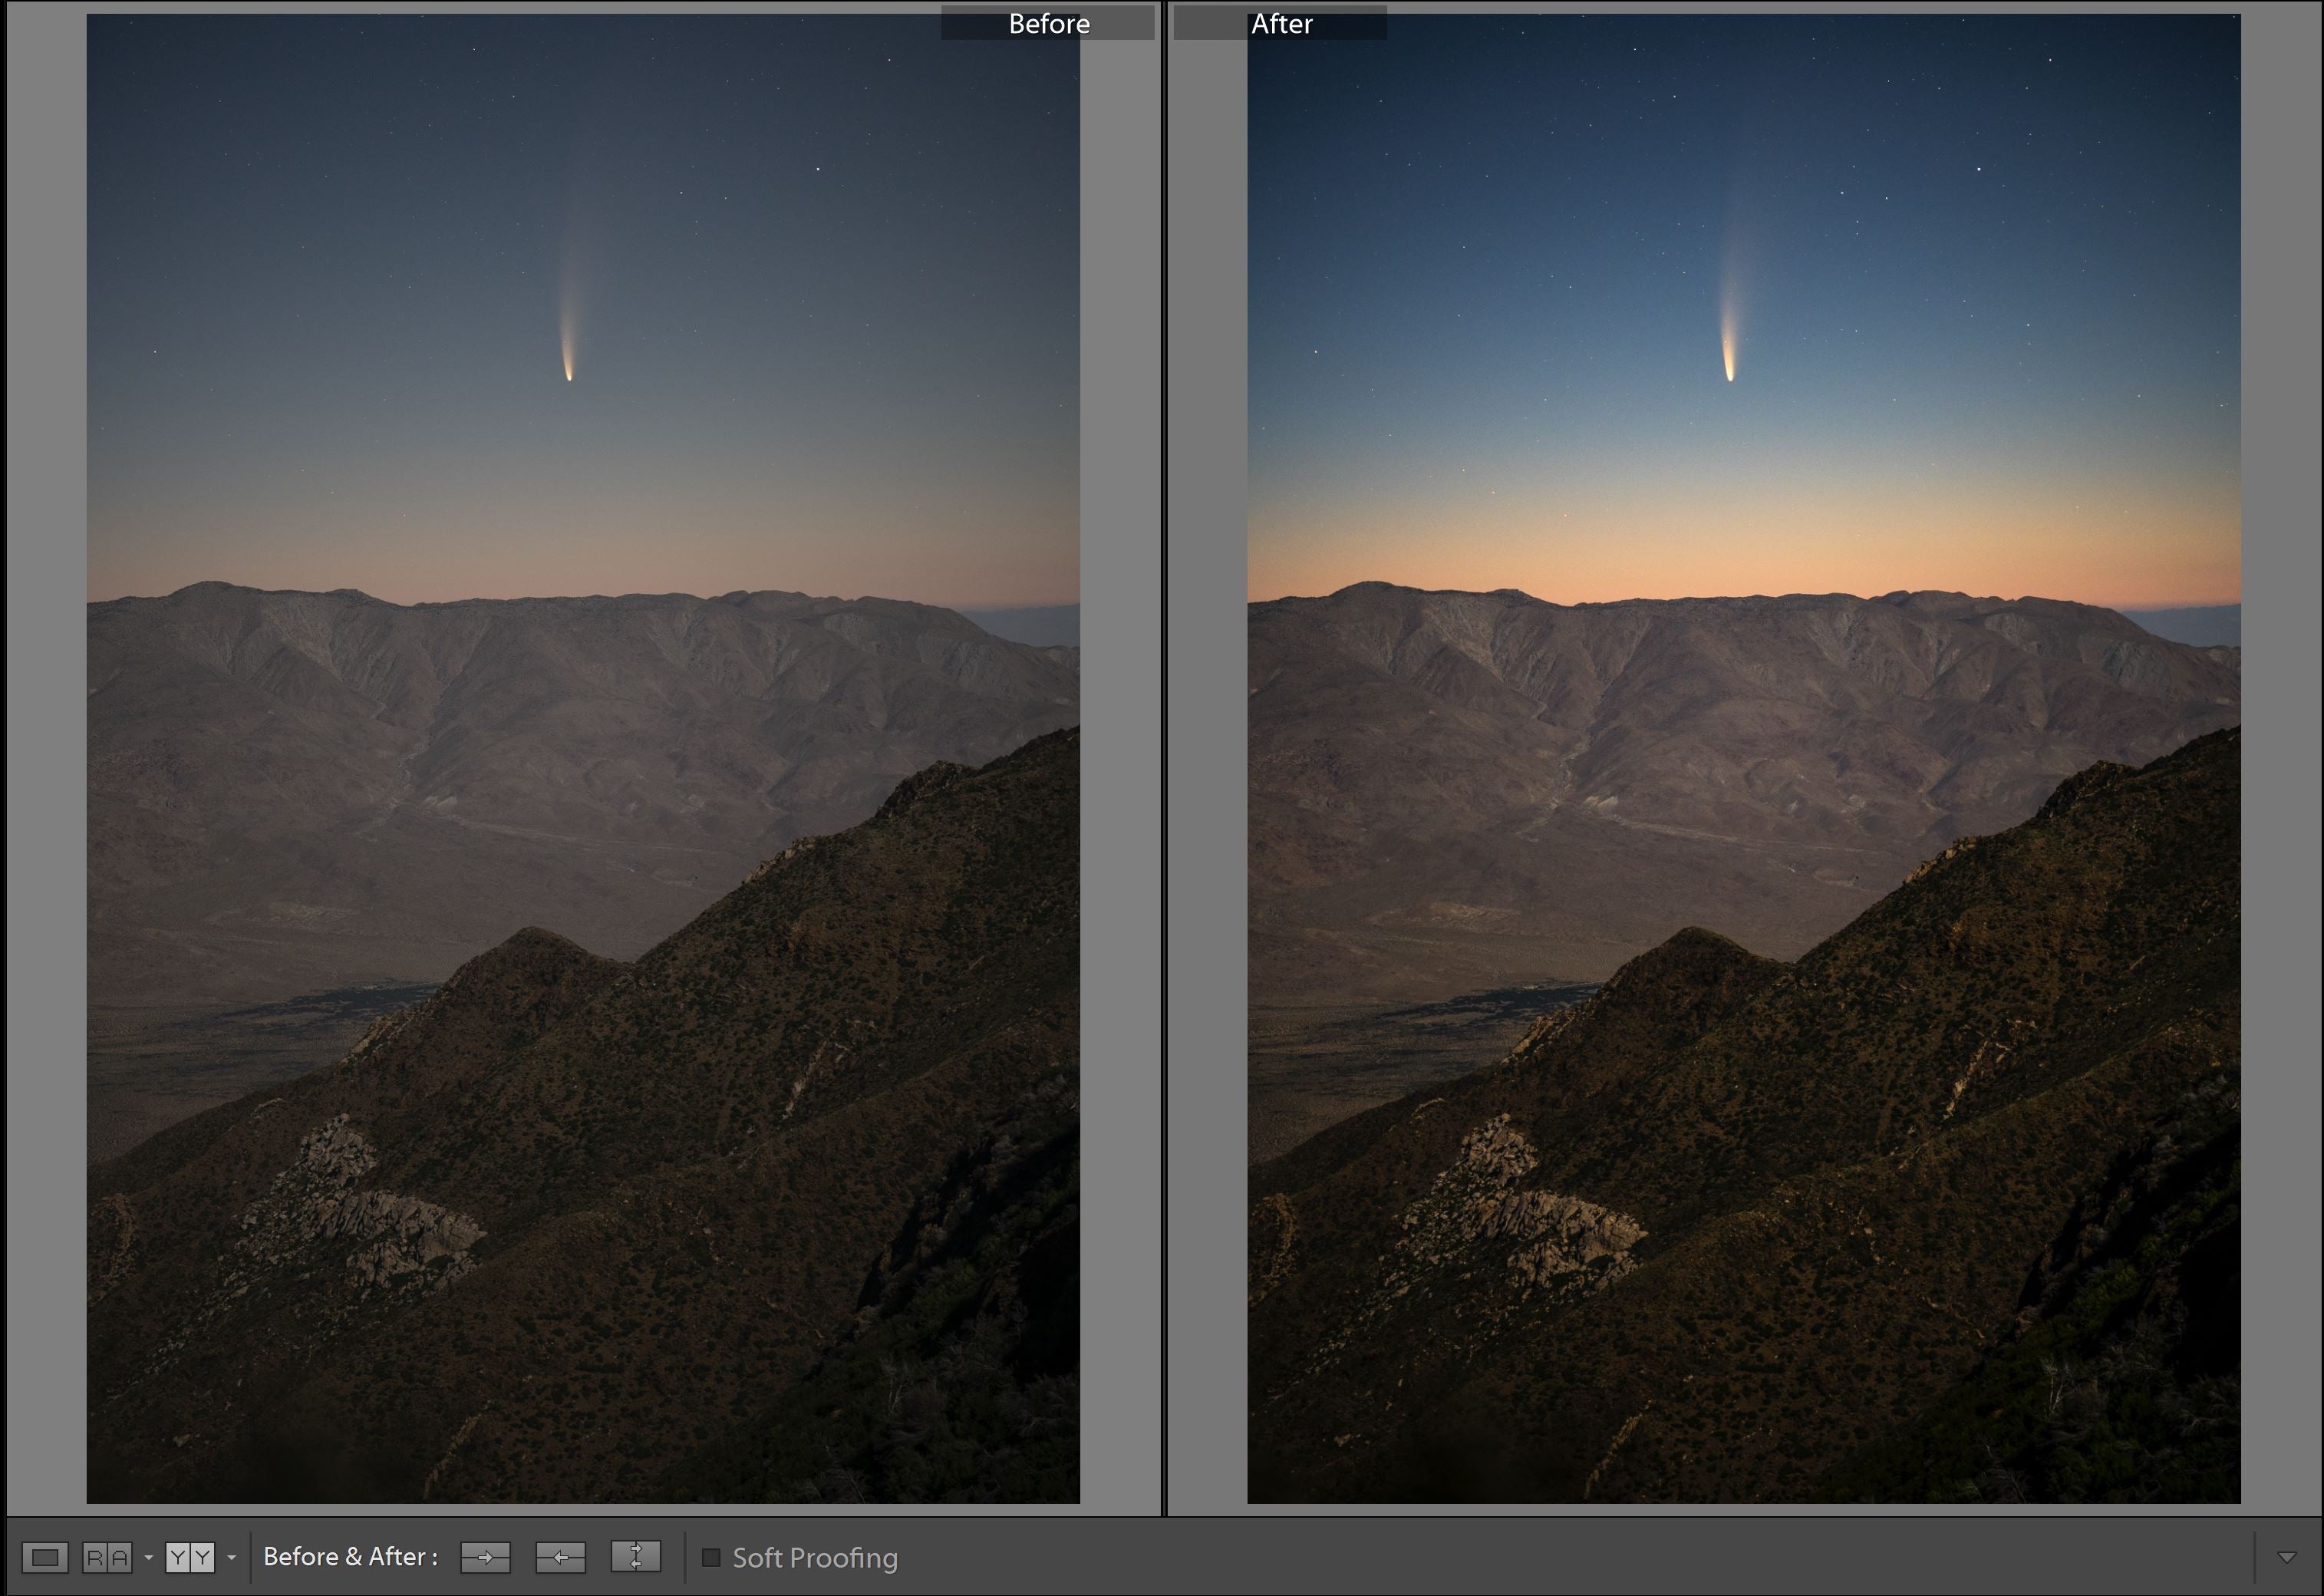 Comet Chase - Astrophotography Presets for Lightroom